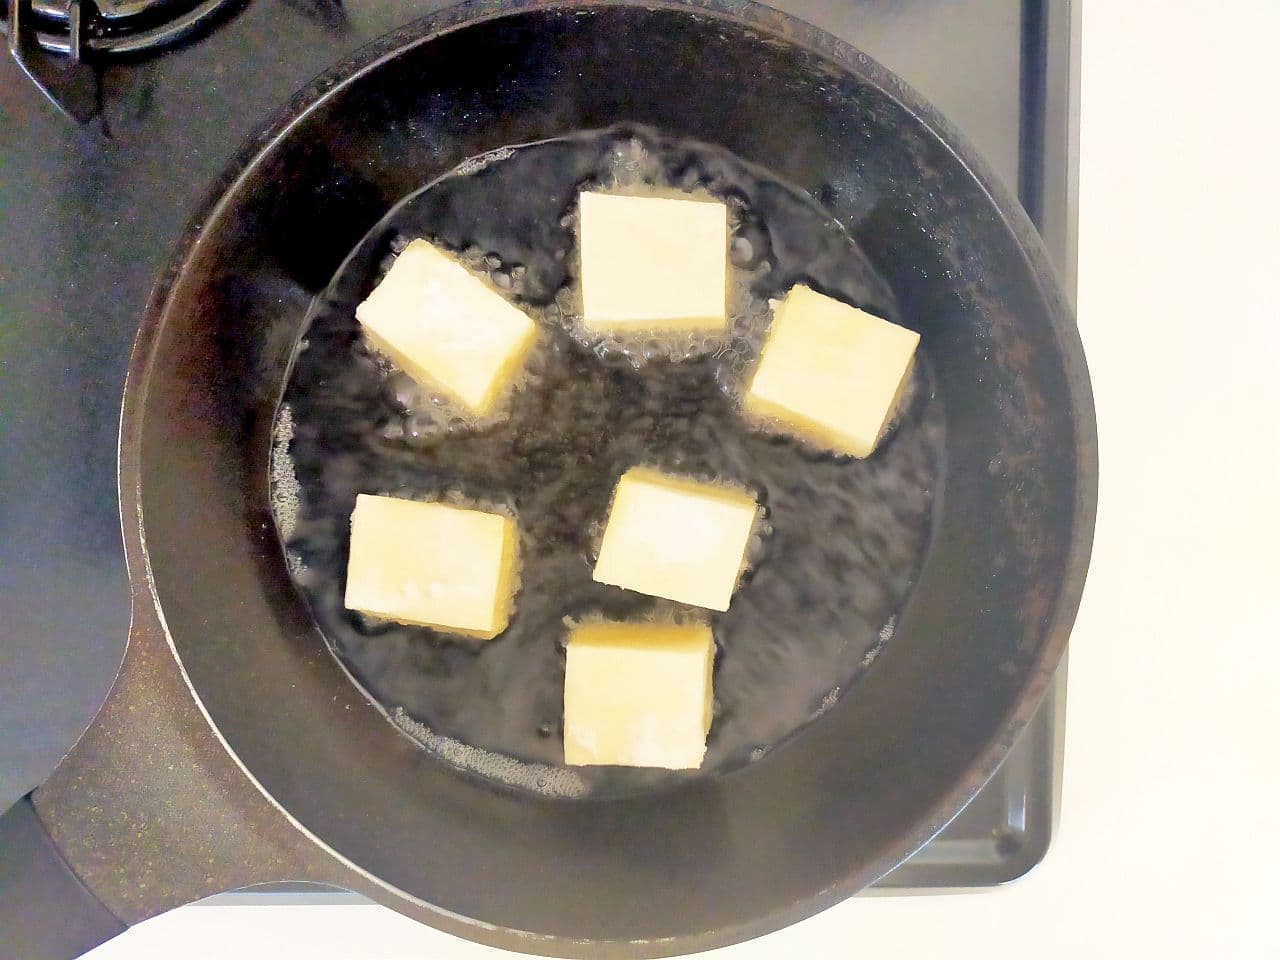 "Fried Koya tofu" recipe